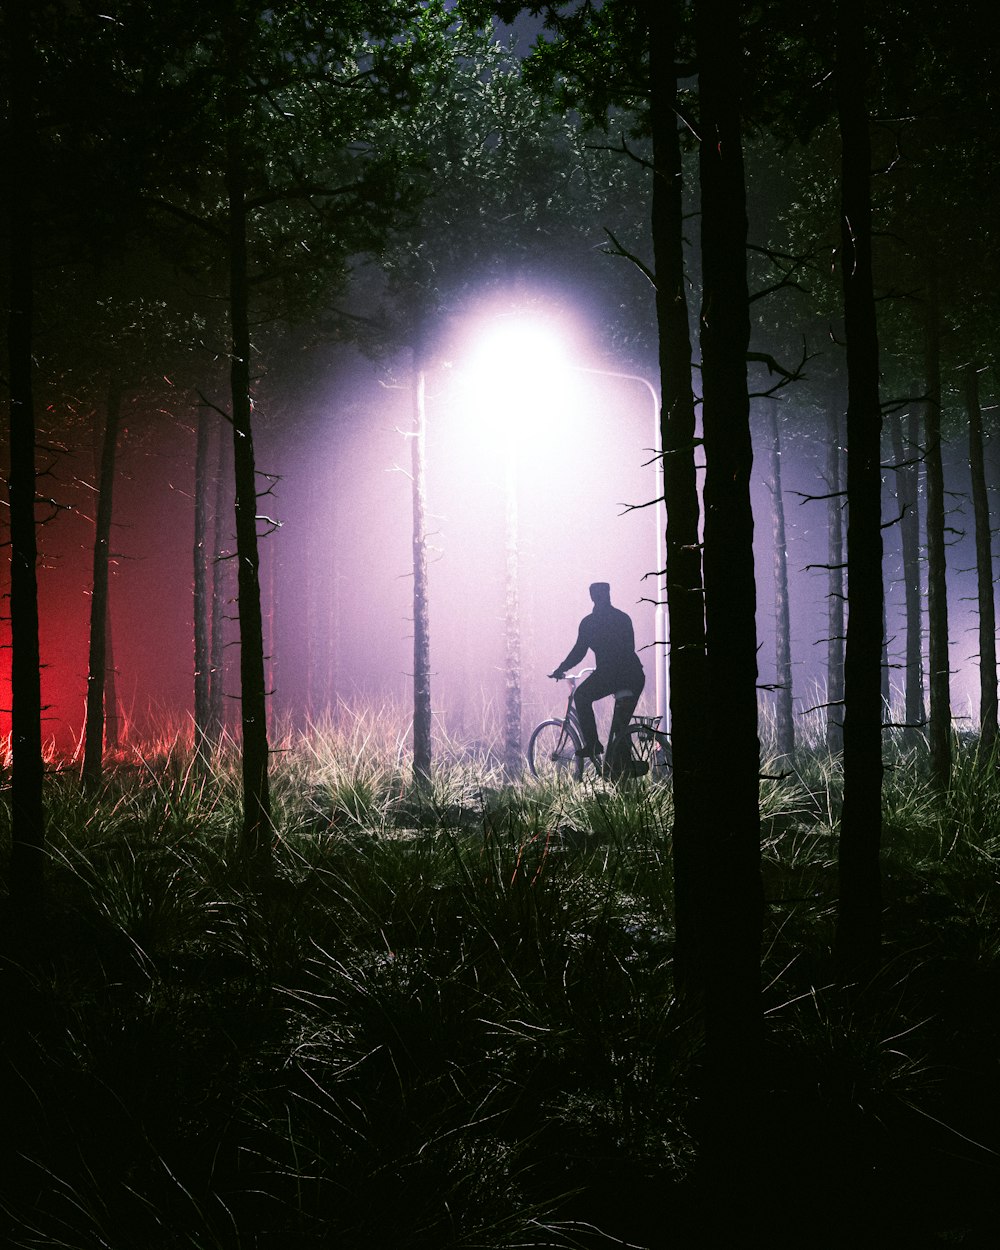 a man riding a bike through a forest at night